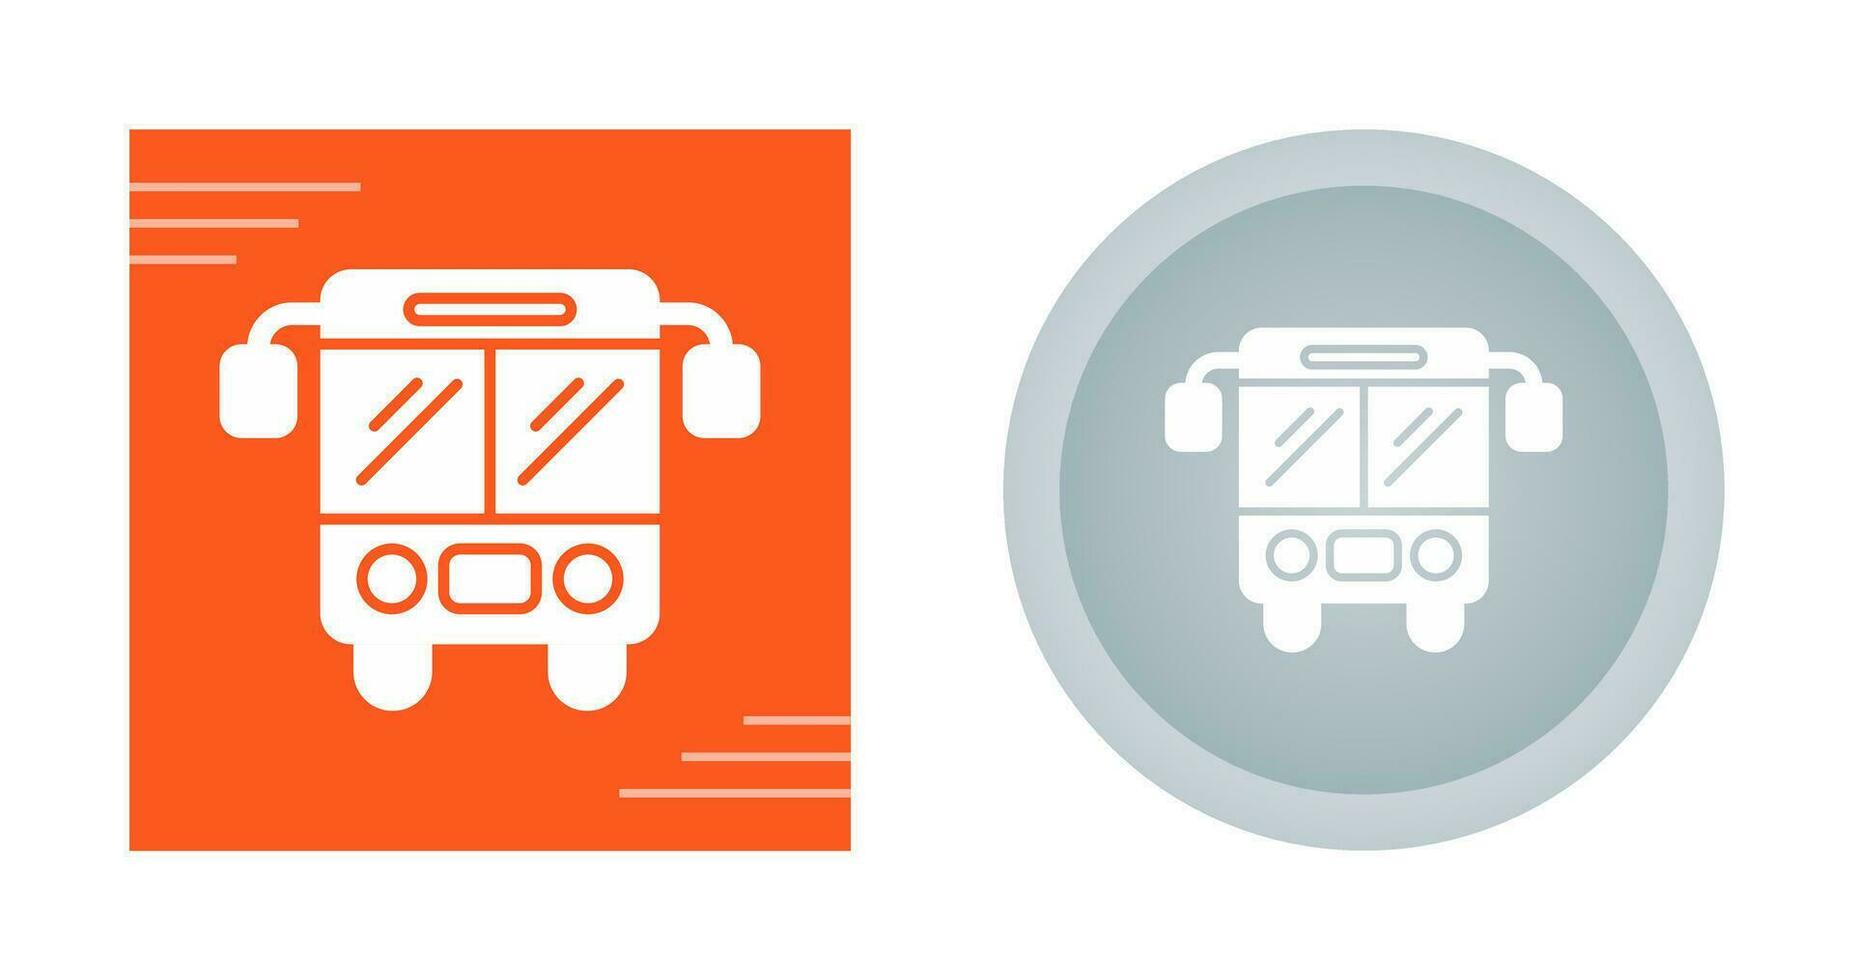 bus vector pictogram